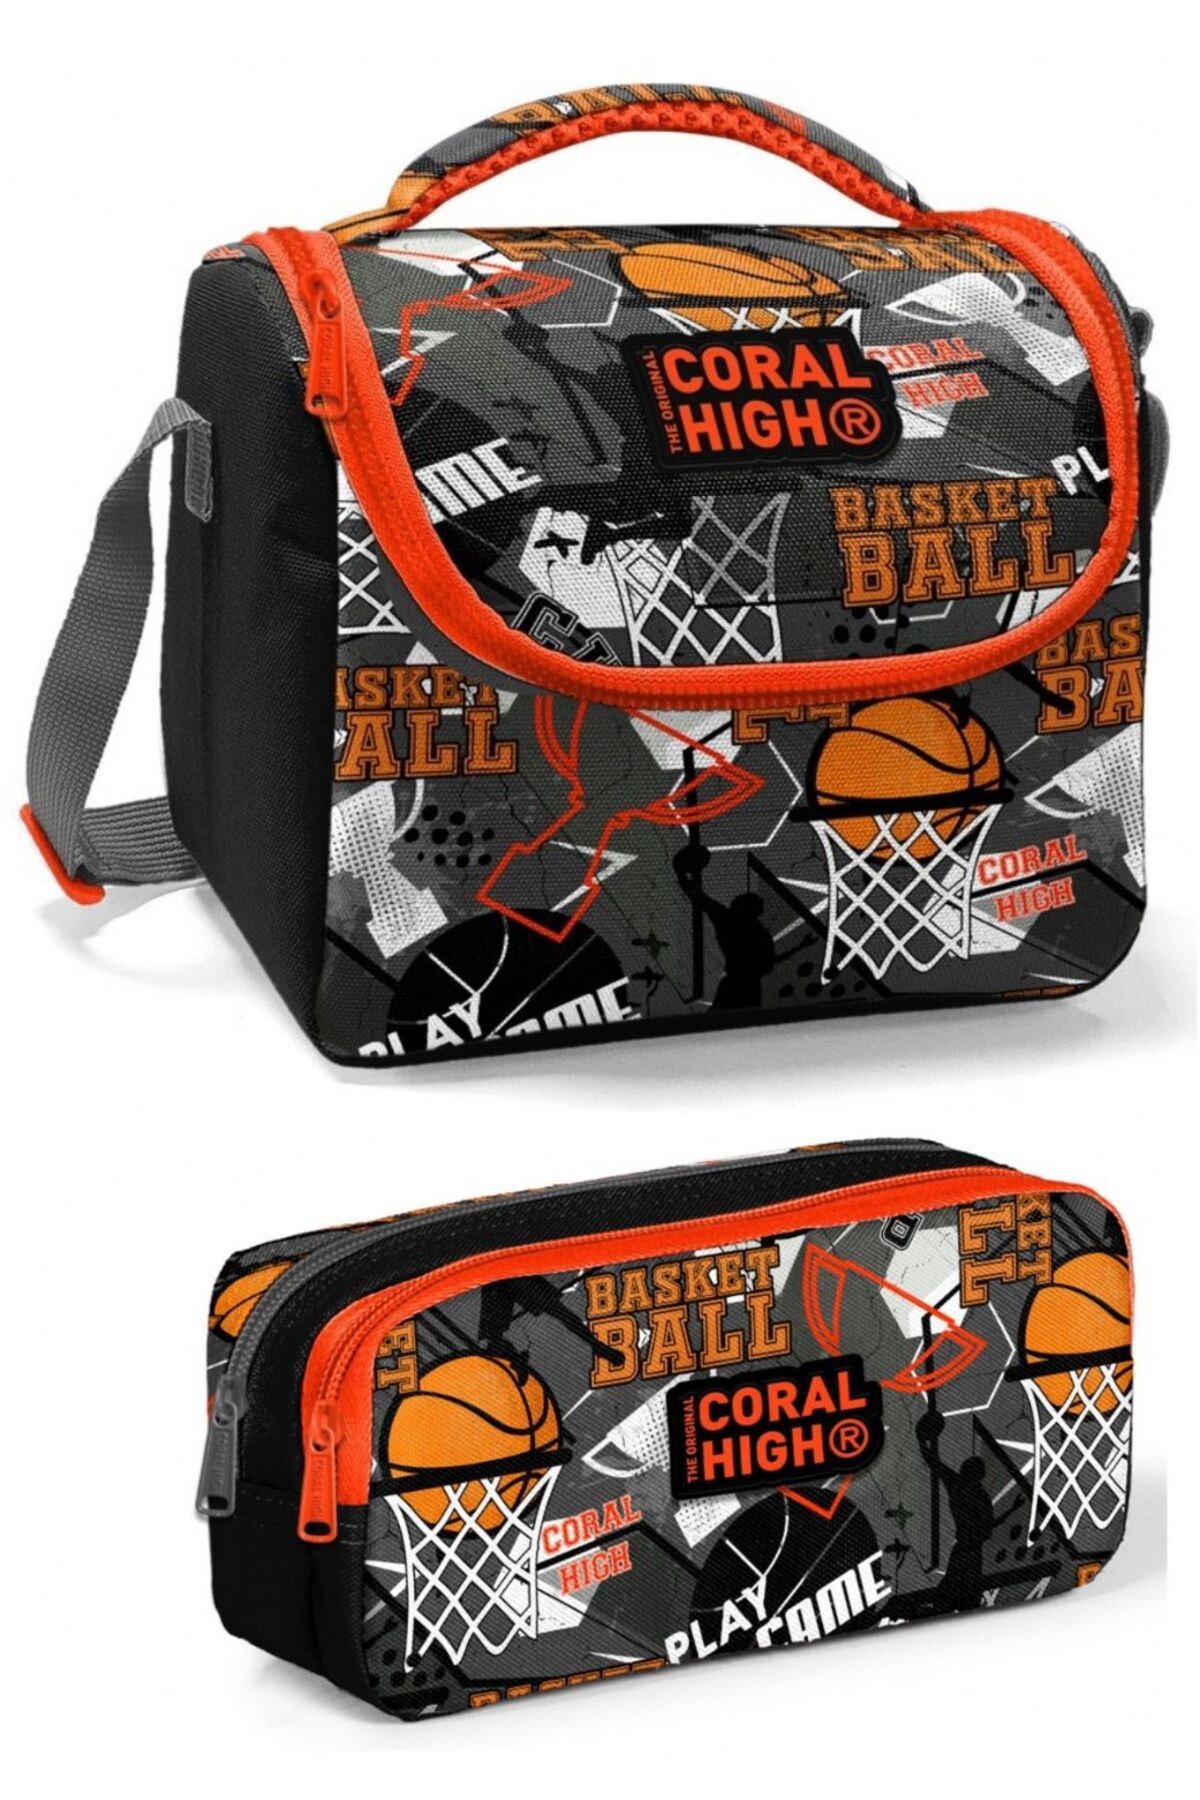 Coral High Siyah Turuncu Basketbol Erkek Çocuk Beslenme Çantası Seti